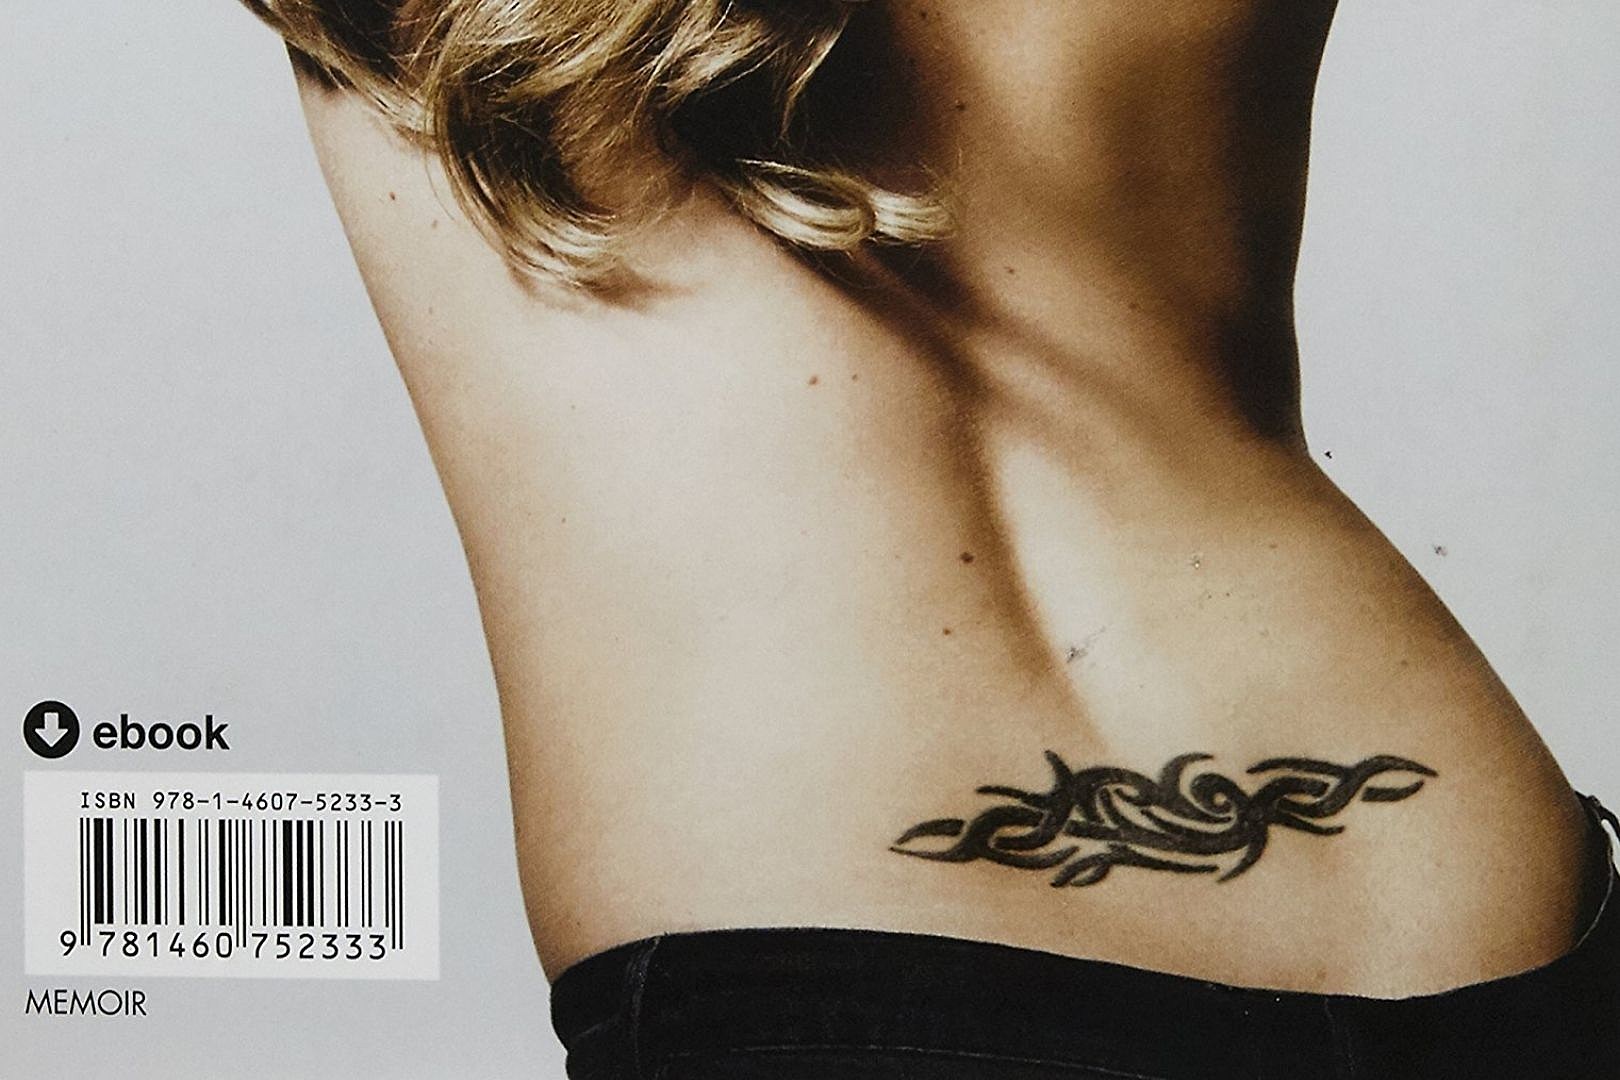 Xtra Naughty Lower back Tattoos | eBay